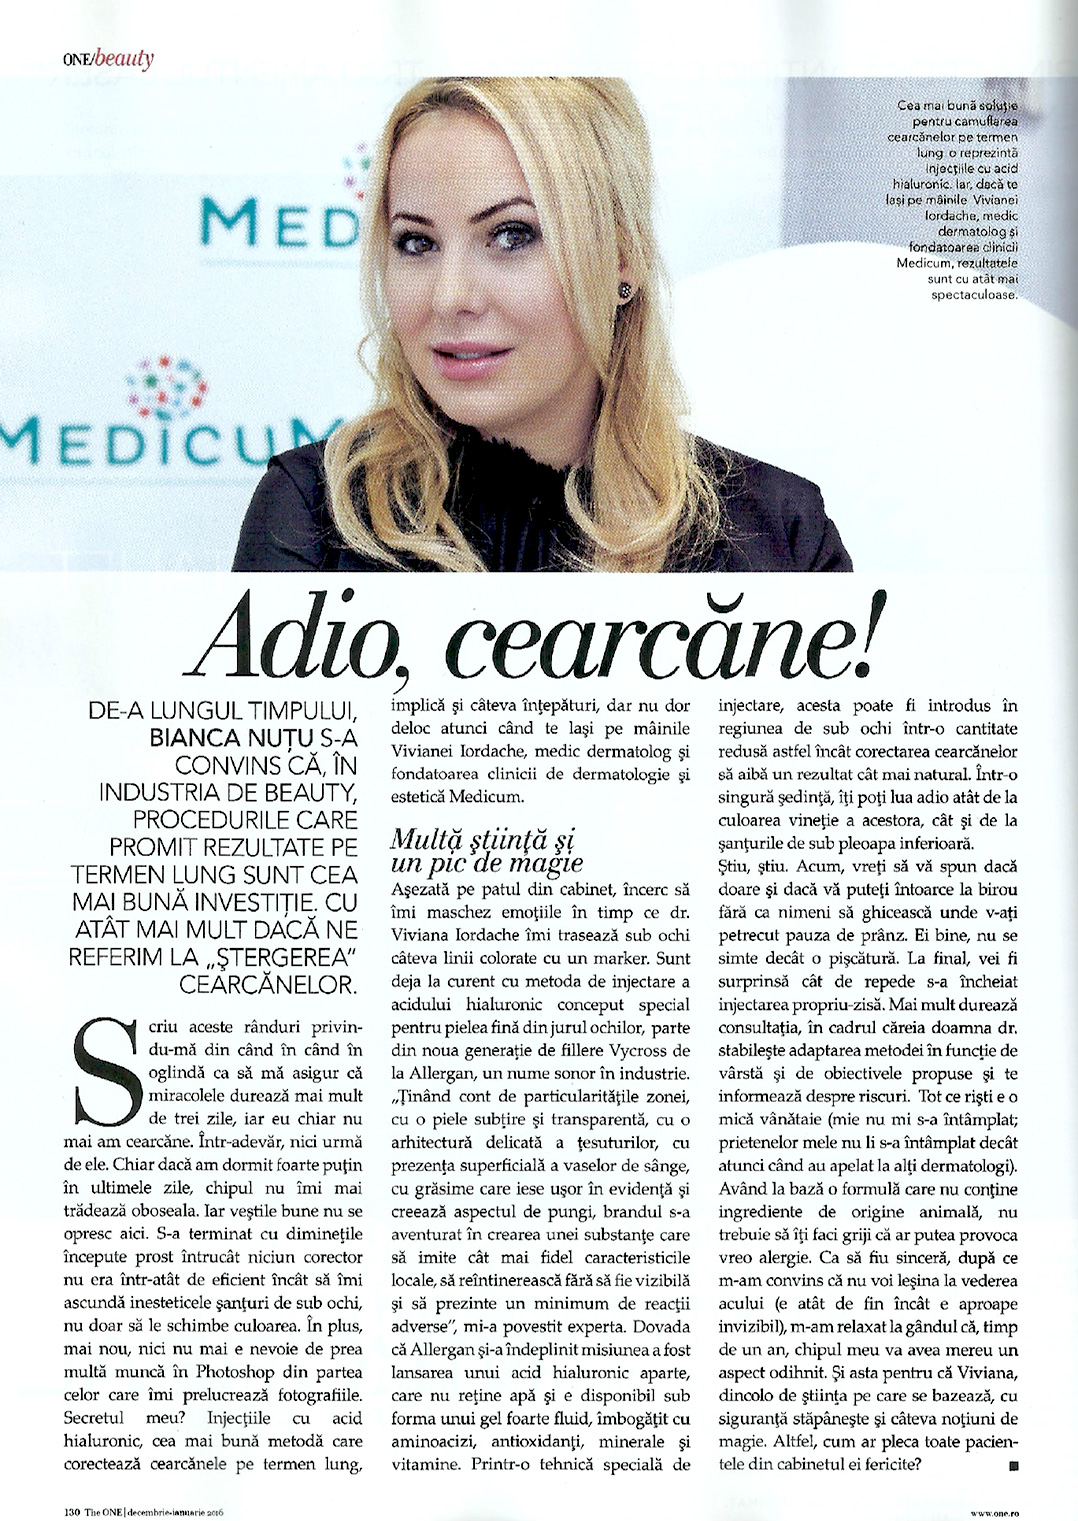 Doctor Viviana Iordache